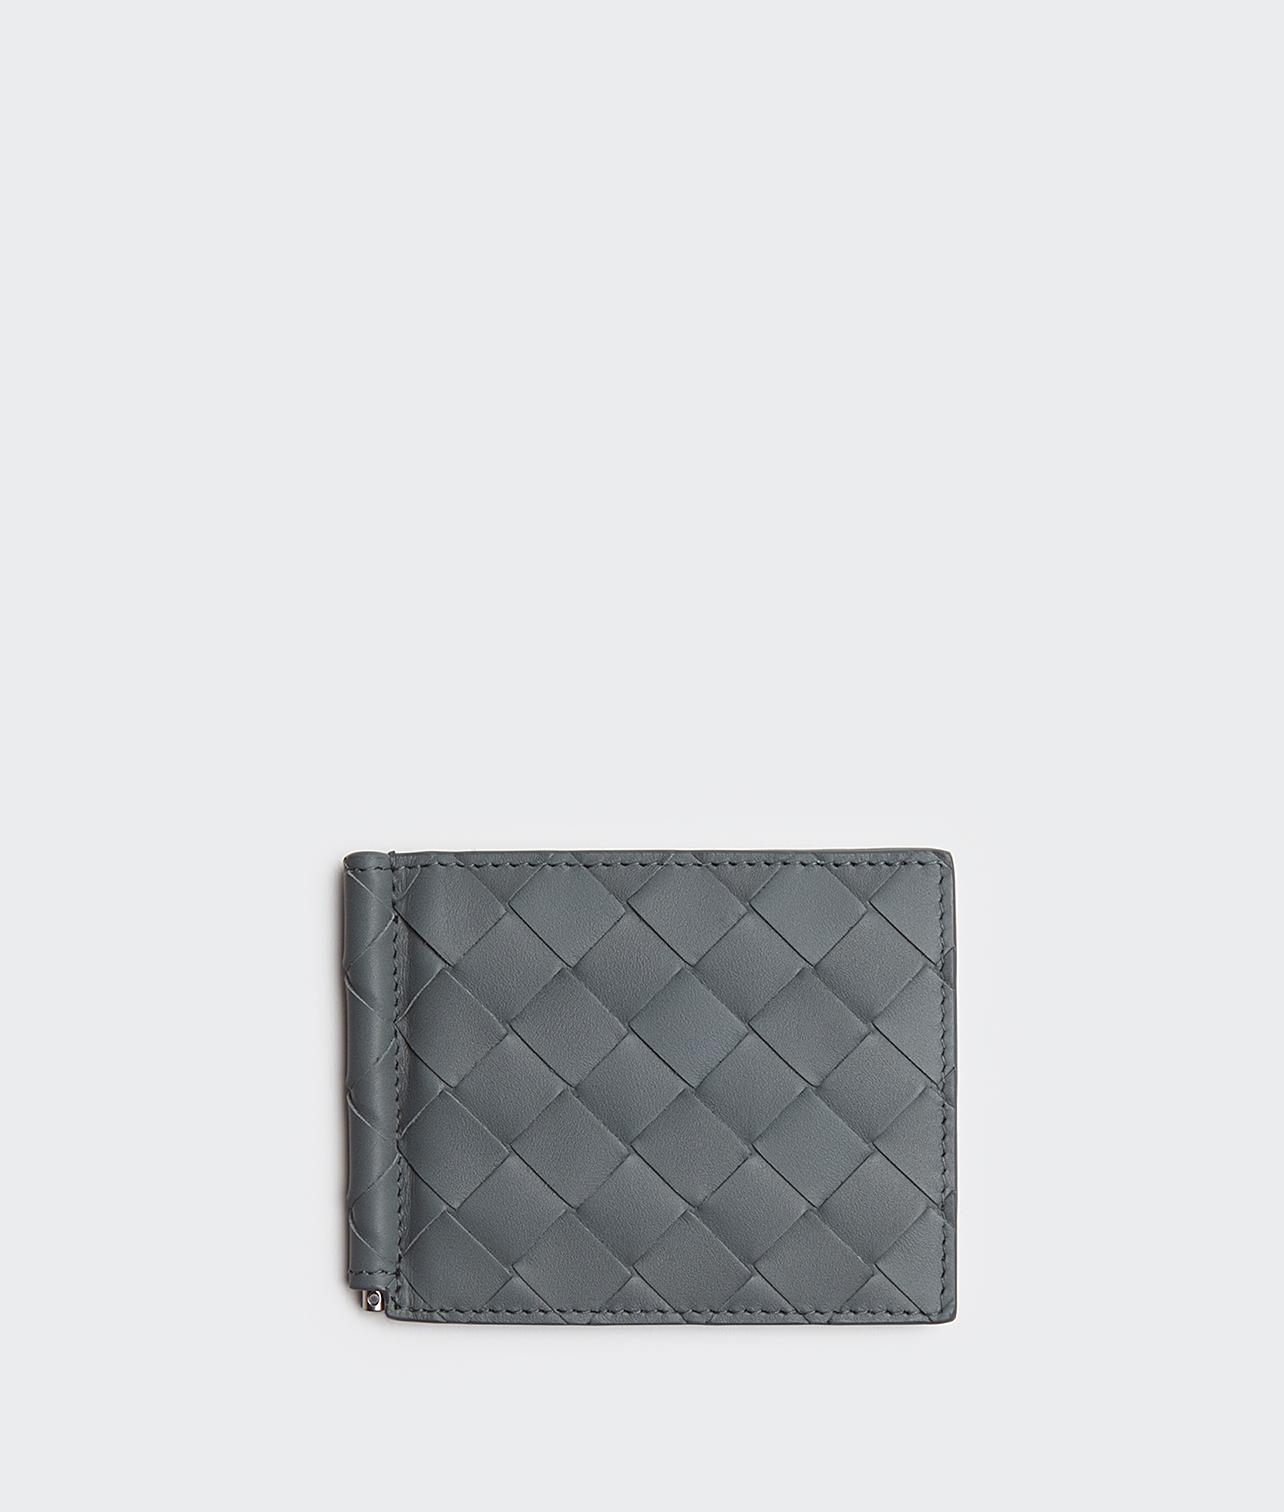 Bottega Veneta Leather Bi-fold Wallet in Slate (Gray) for Men - Lyst